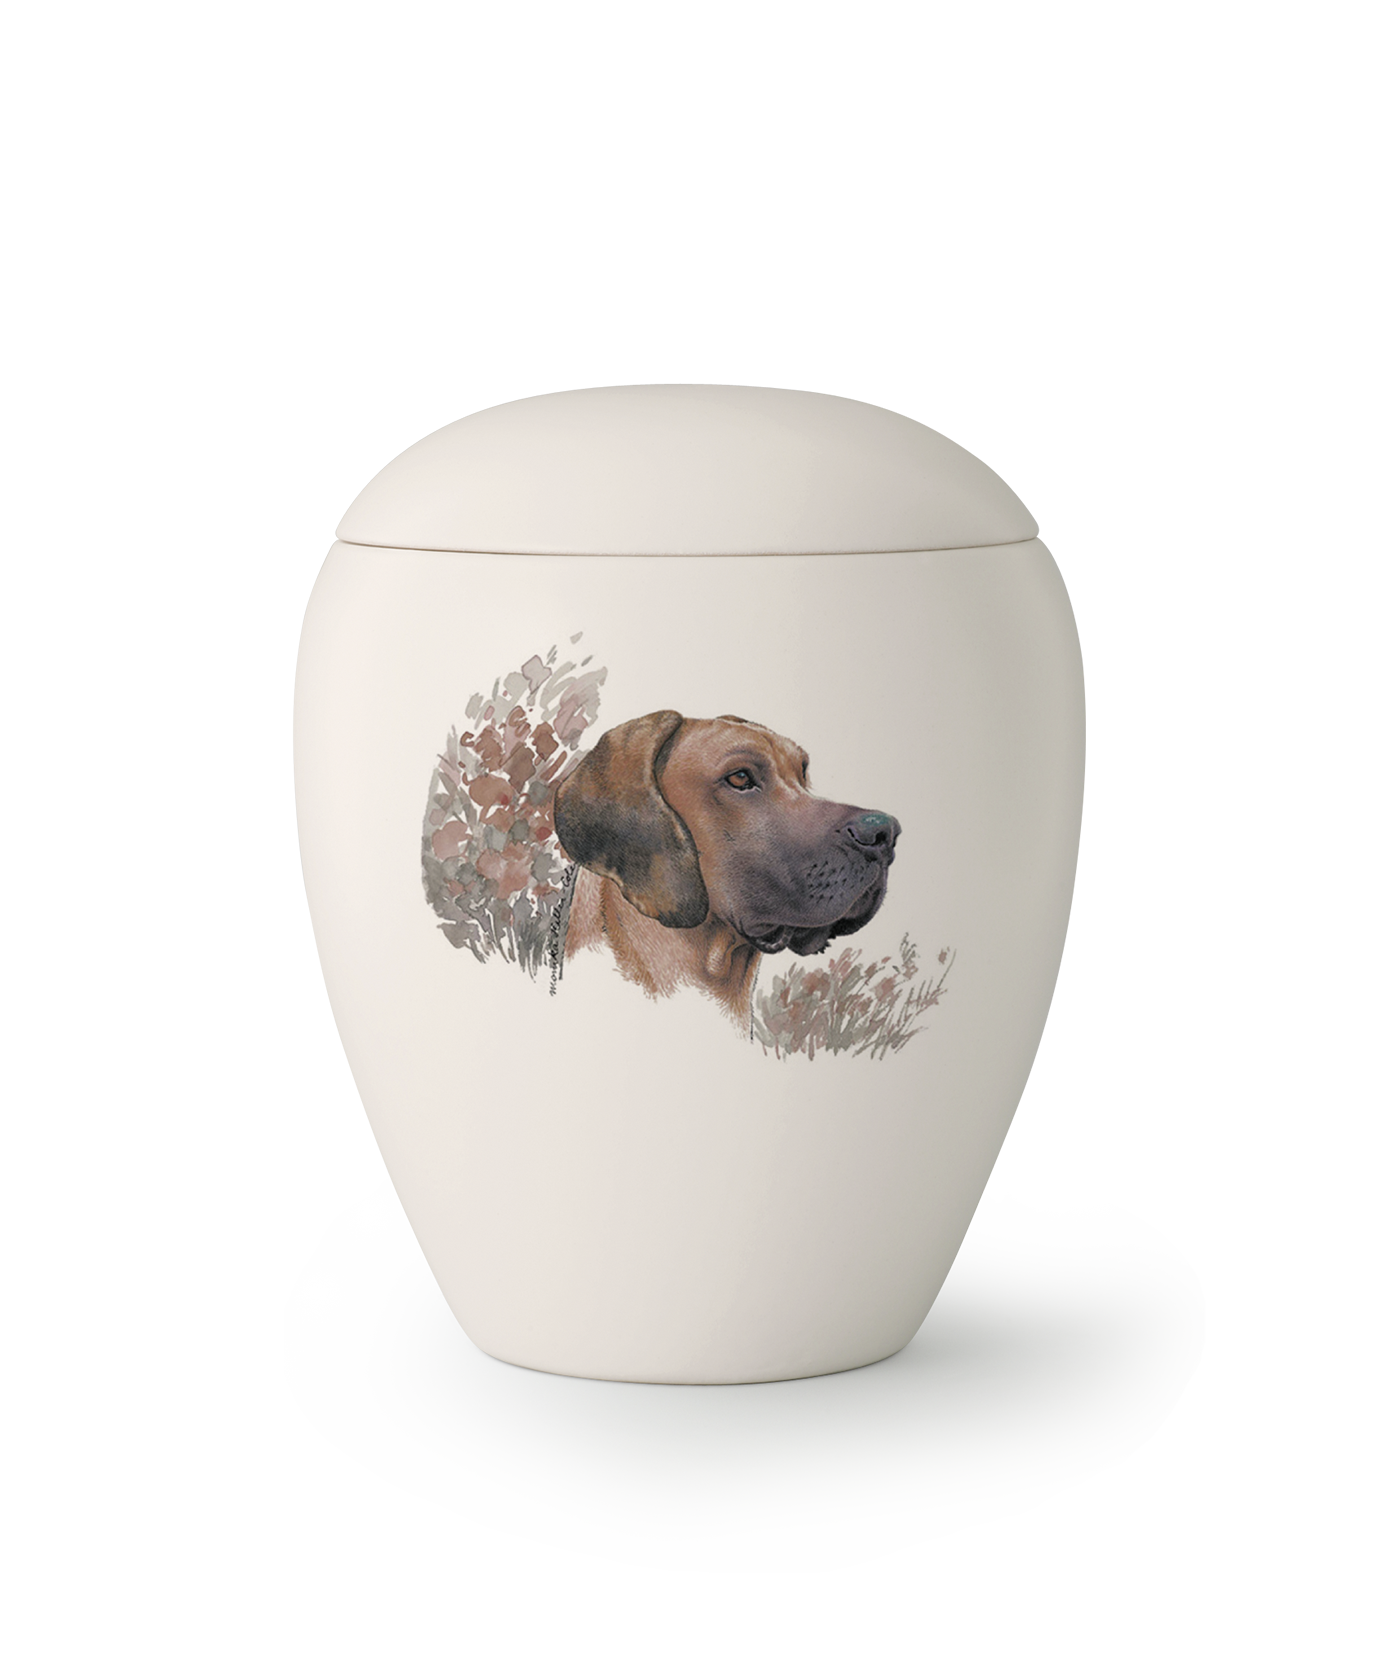 Tierurne - Keramik Hund "Dogge" 2800ml